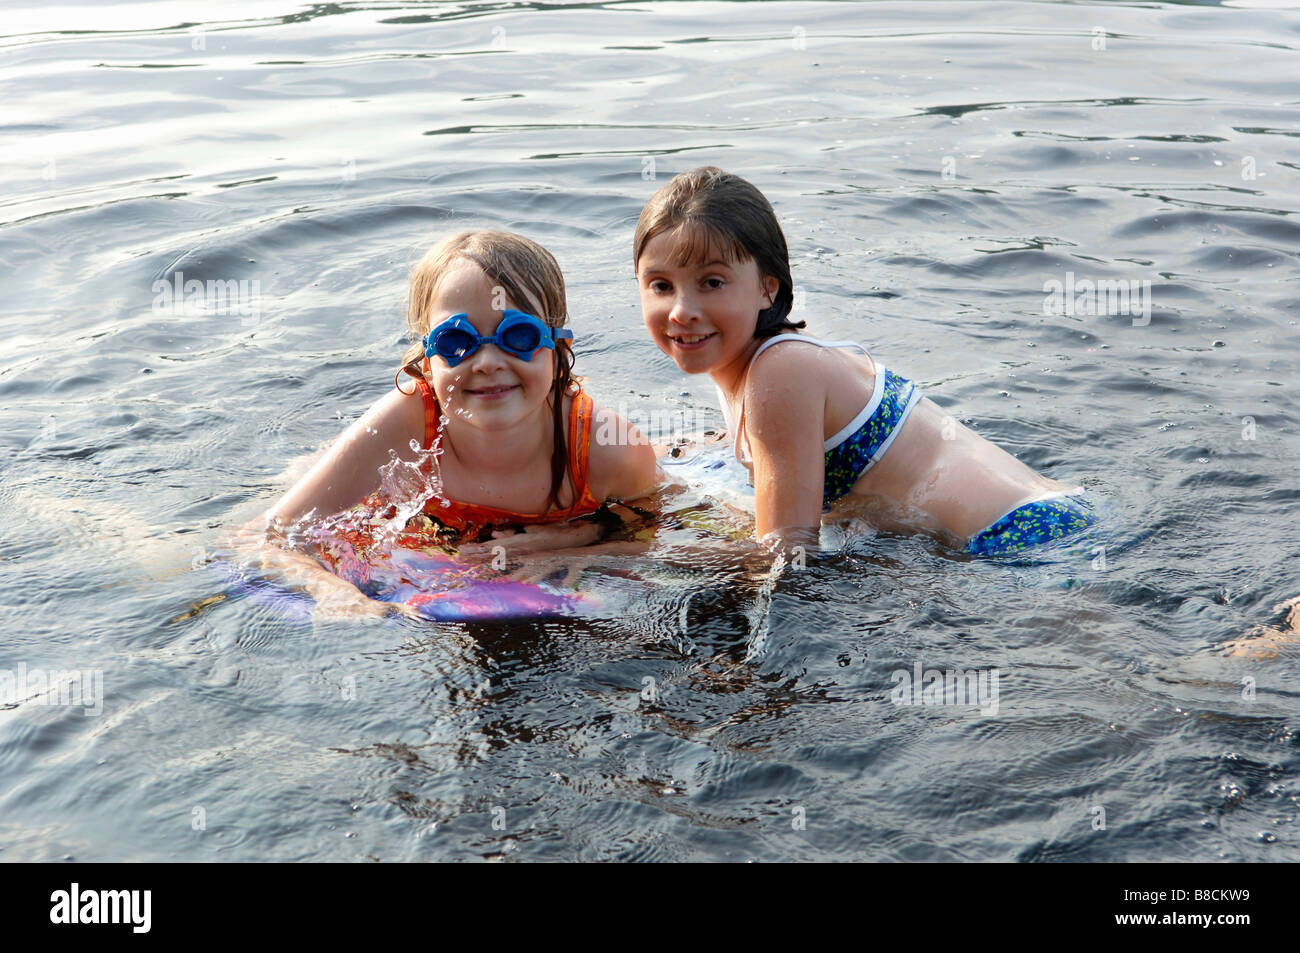 Girls, 8 years old, Swimming Lake Stock Photo - Alamy